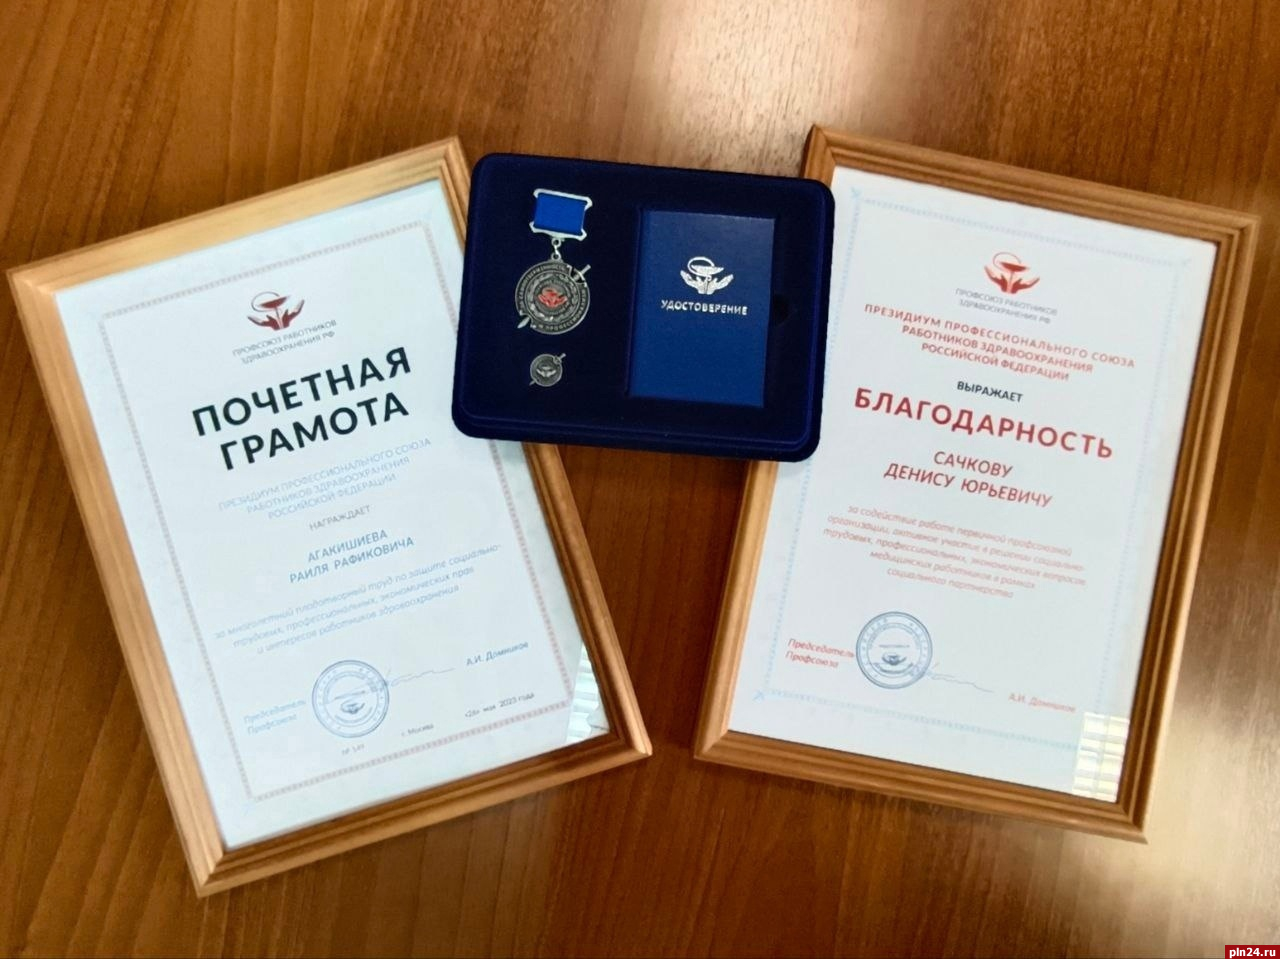 Три псковских врача получили награды от Профсоюза работников здравоохранения РФ